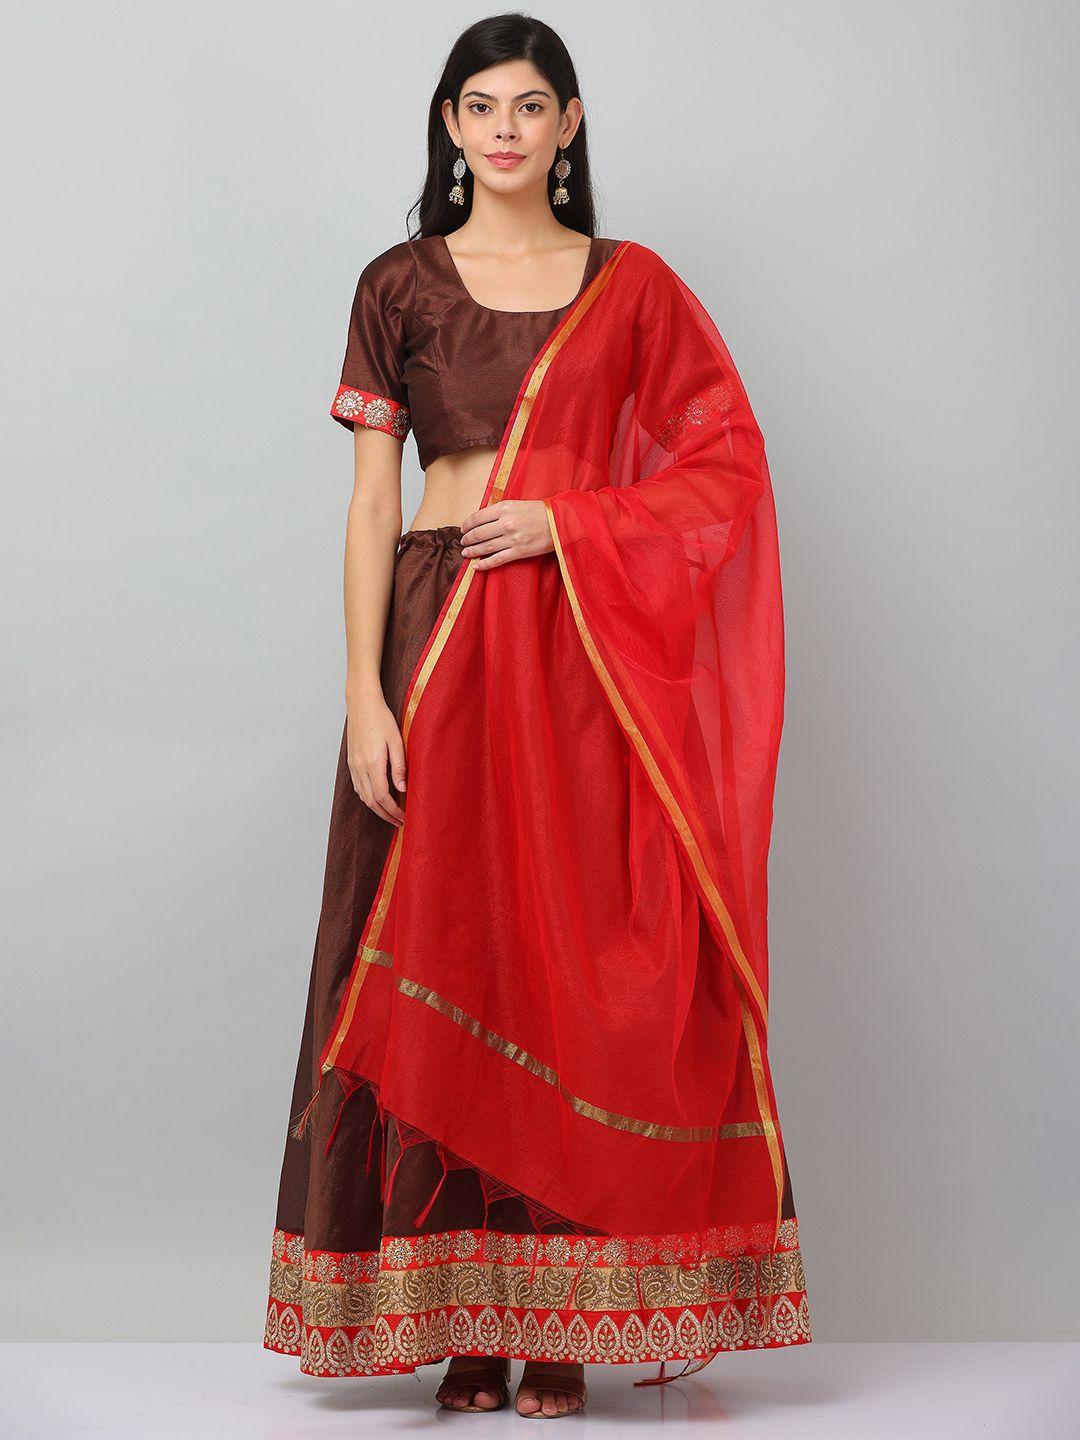 kaanchie nanggia brown & red ready to wear lehenga & blouse with dupatta